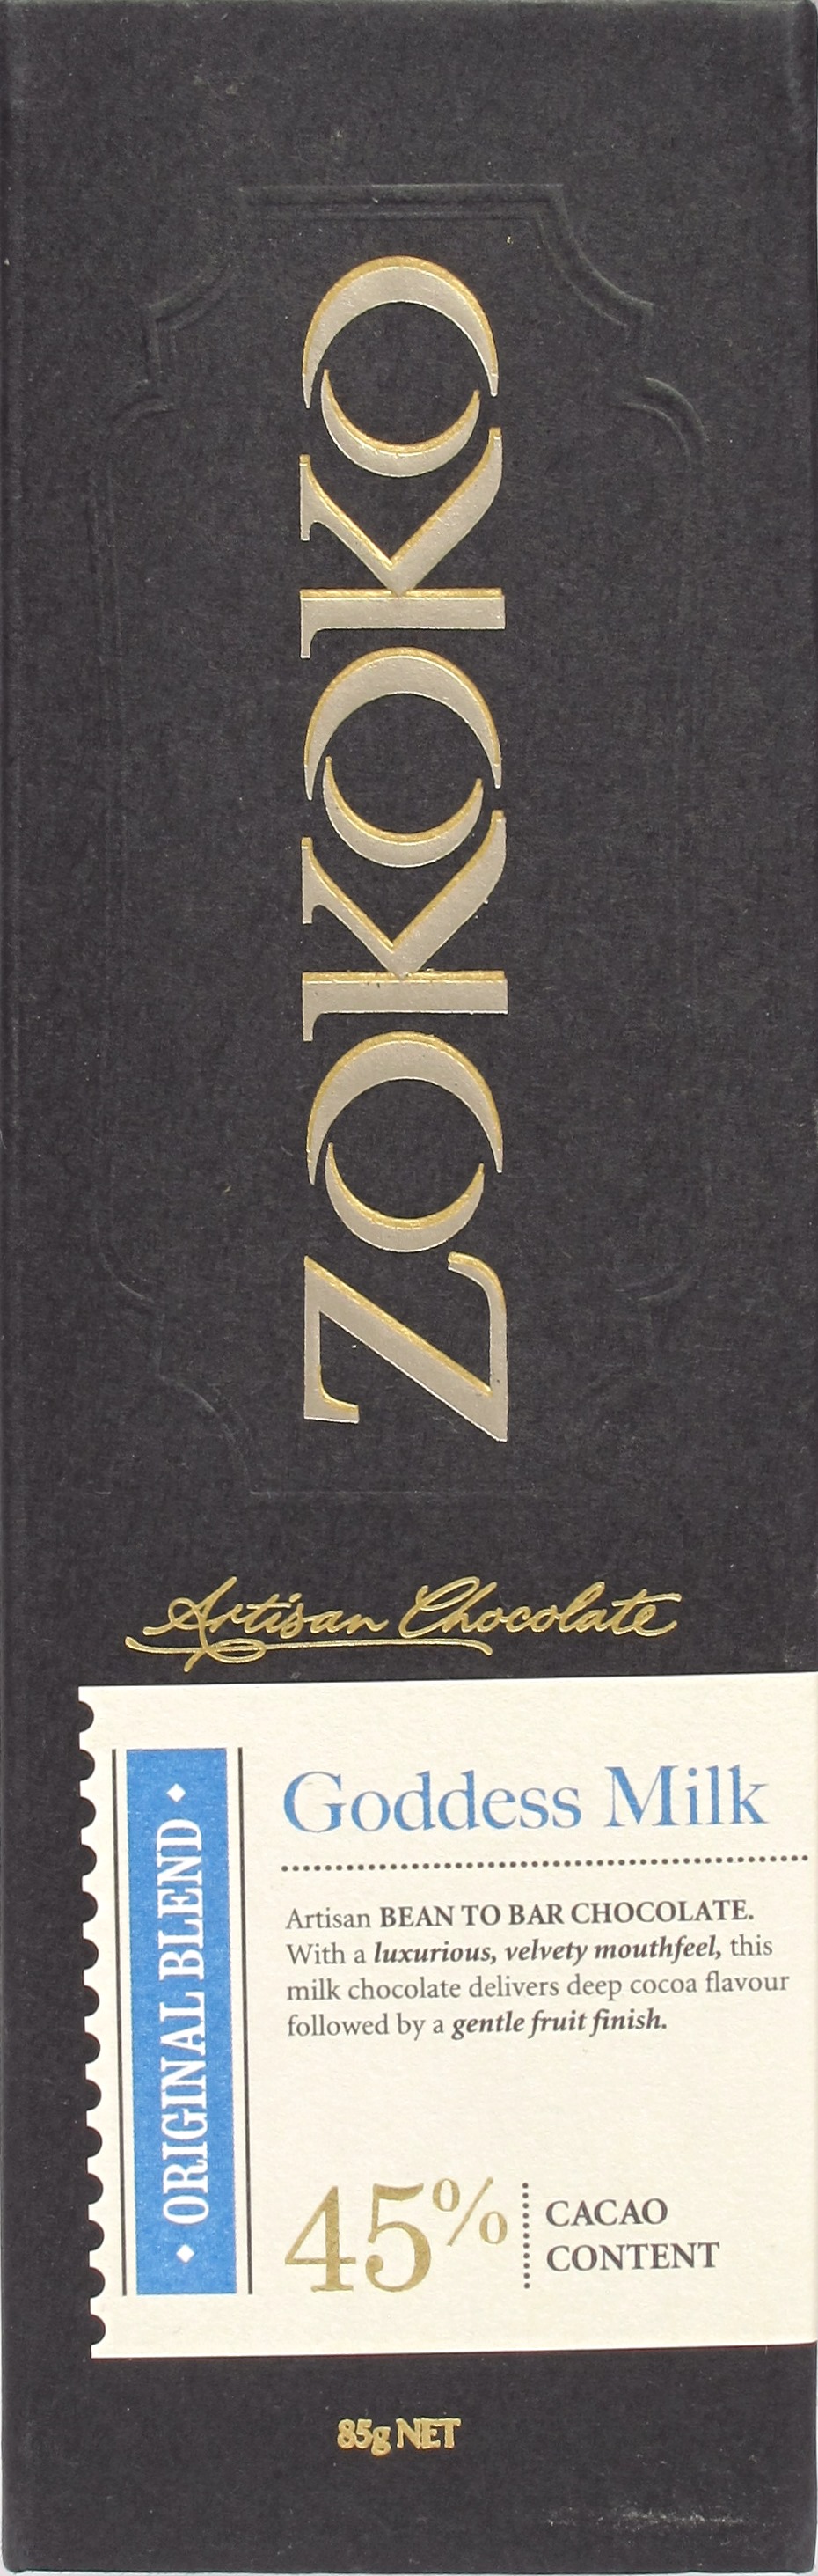 Cover der Zokoko-Milchschokolade "Goddess Milk"